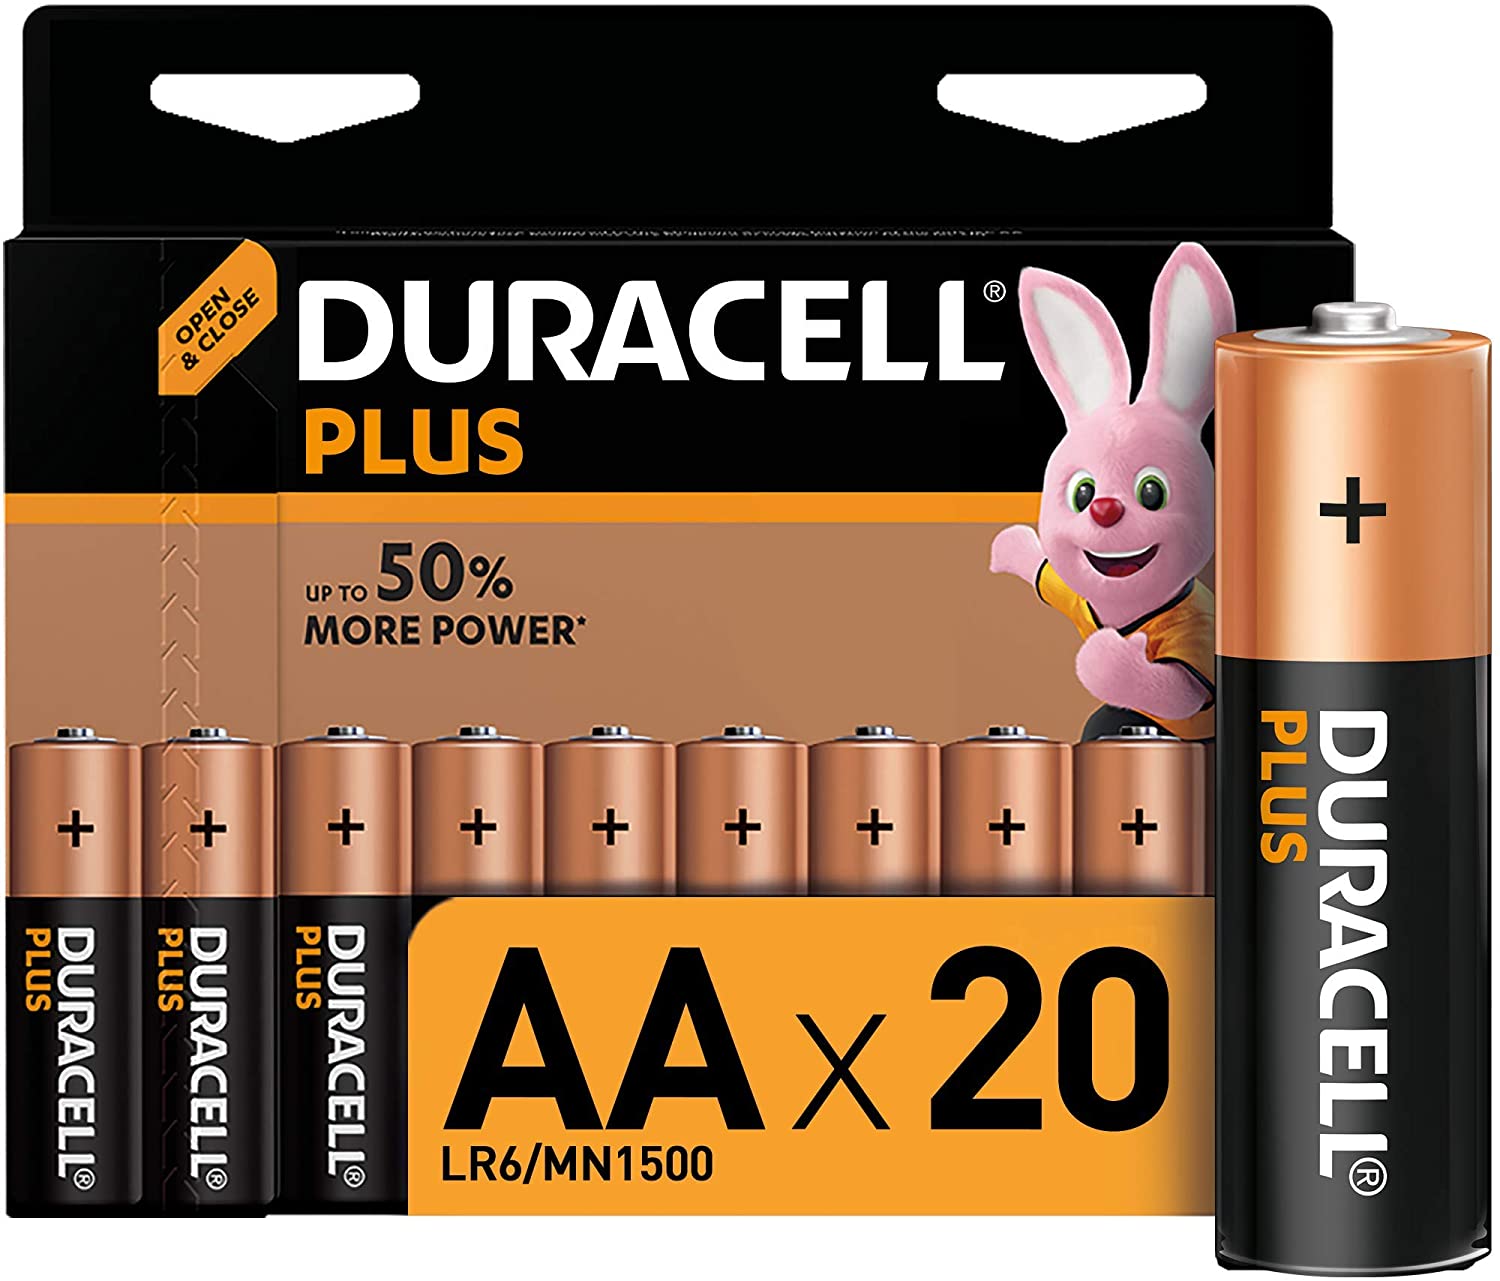 Die leistungsstärksten AA Batterien aus dem Hause Duracell